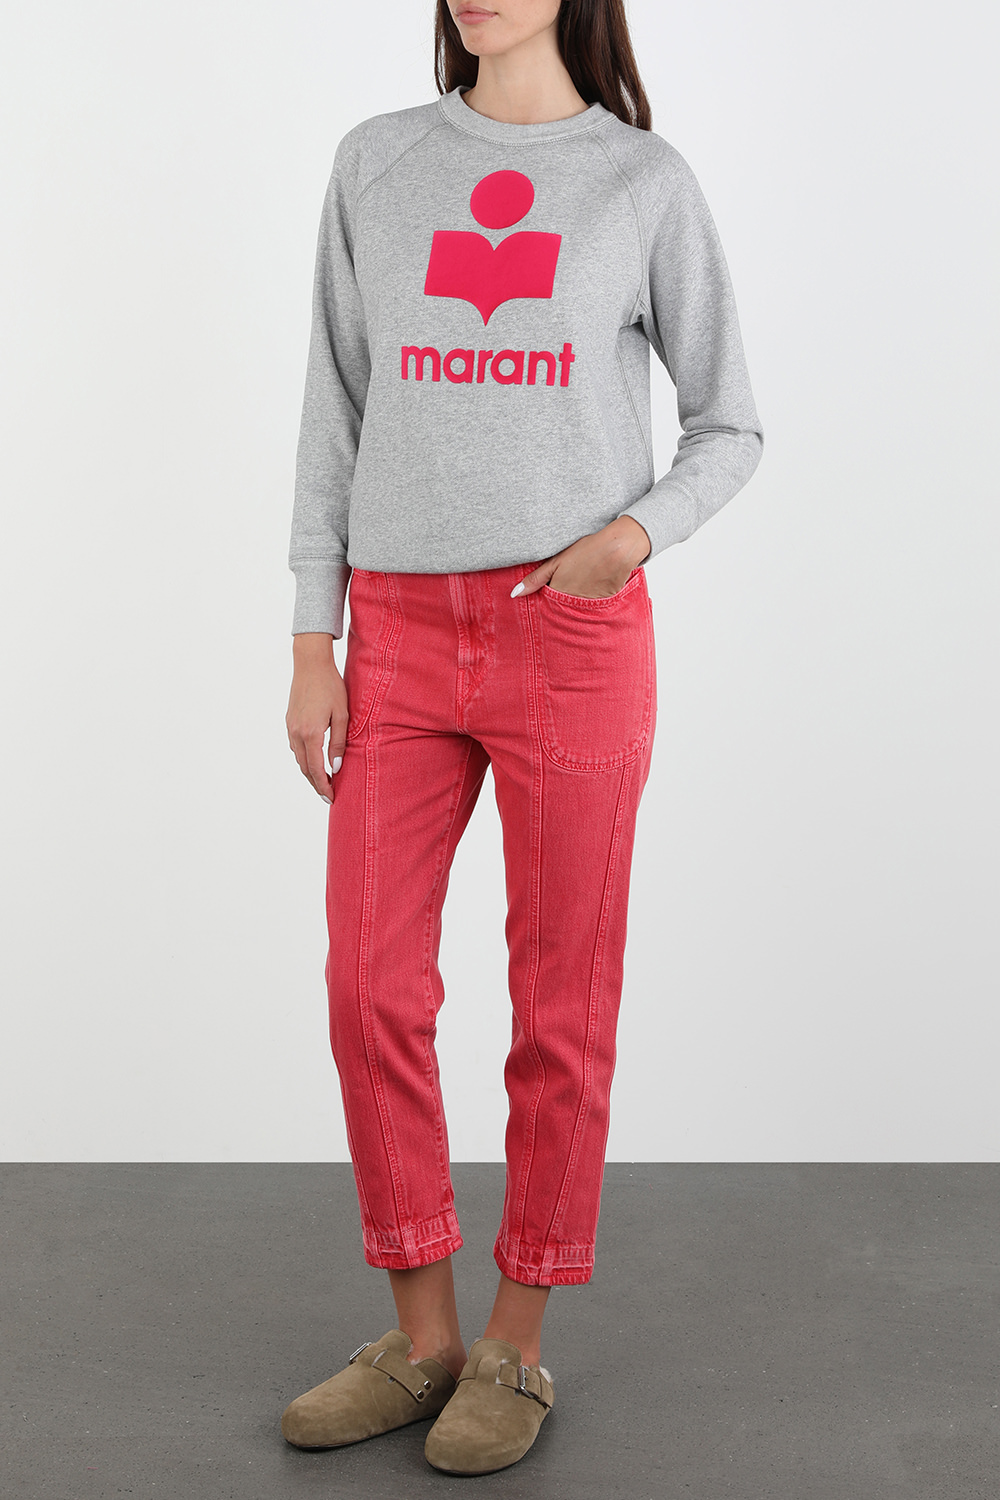 Milly Marant Sweatshirt in Grey ISABEL MARANT